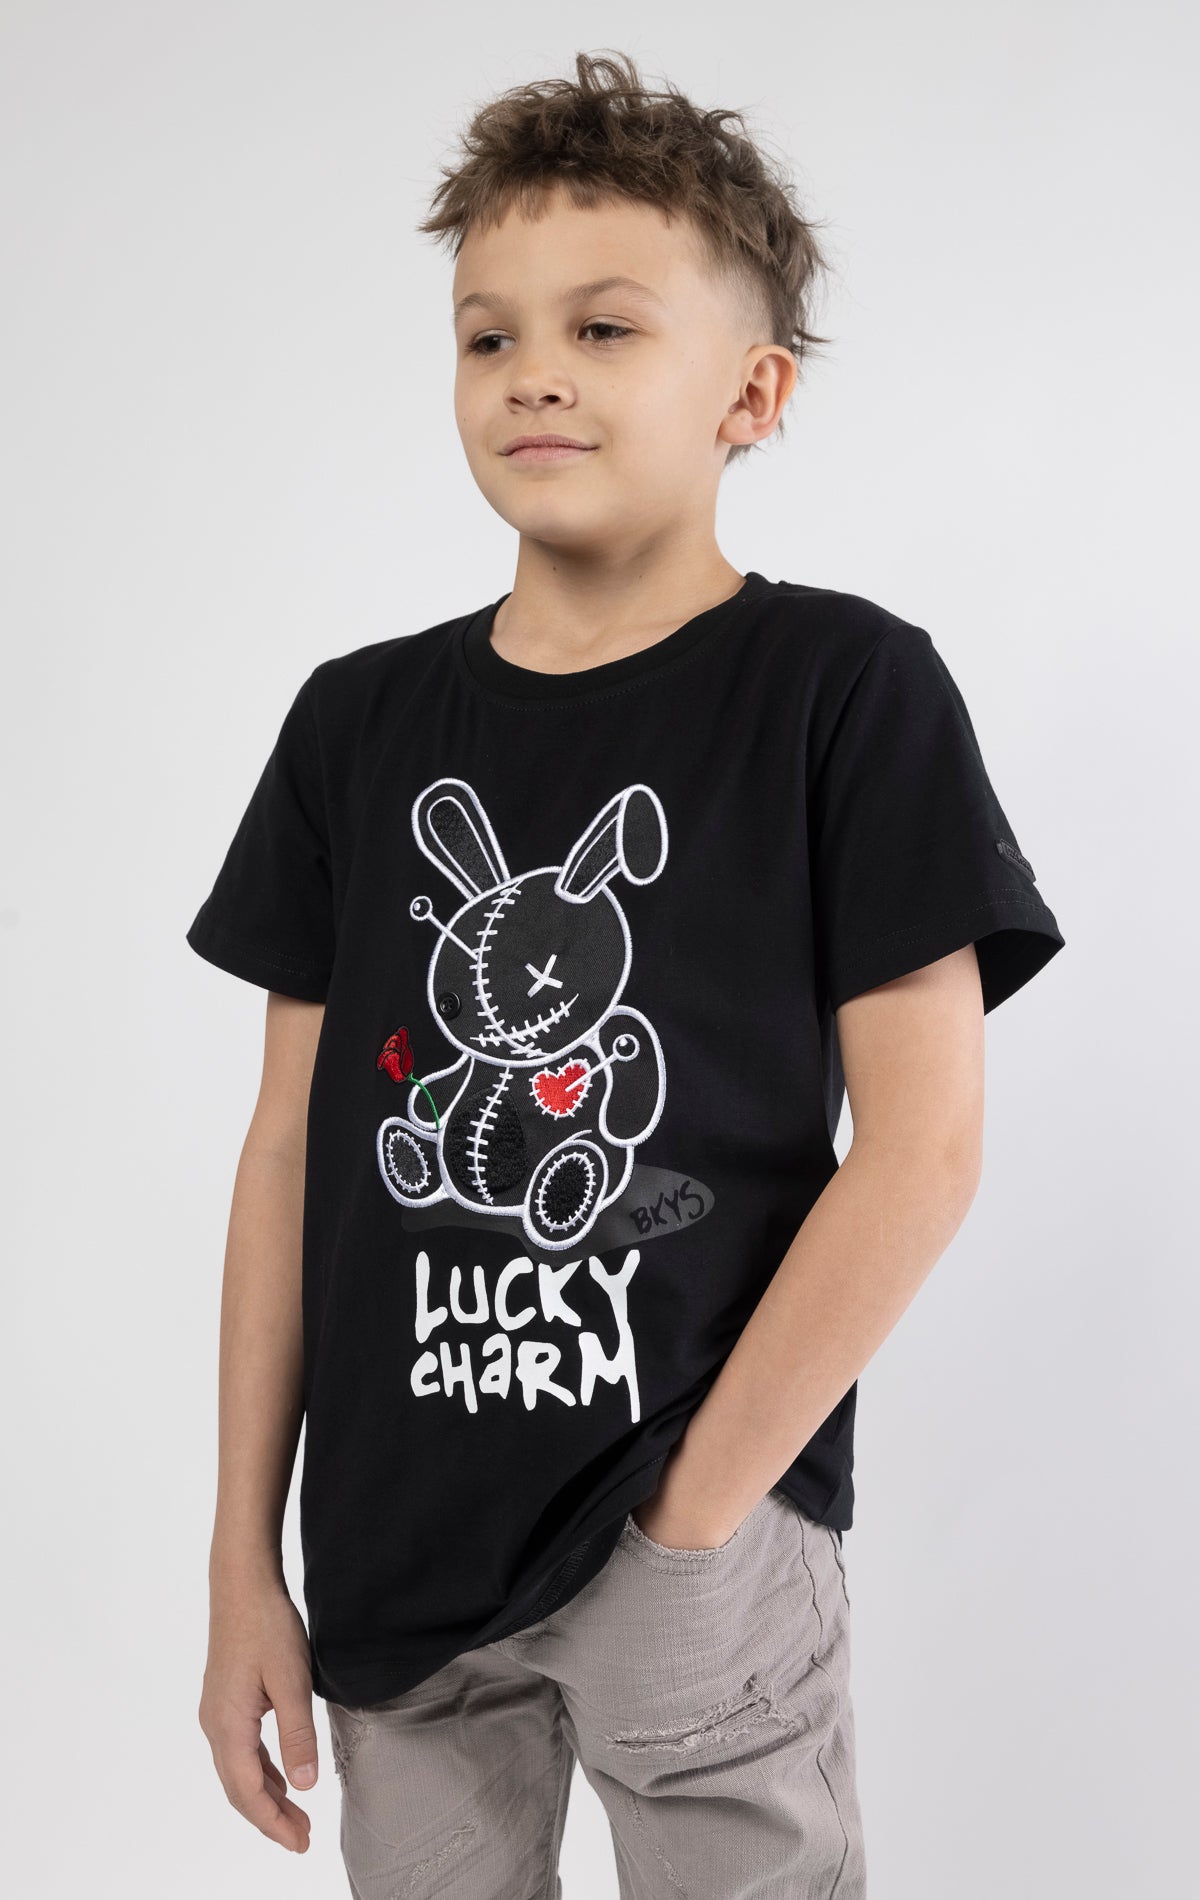 BKYS Black reflect Lucky Charm kids t shirt.